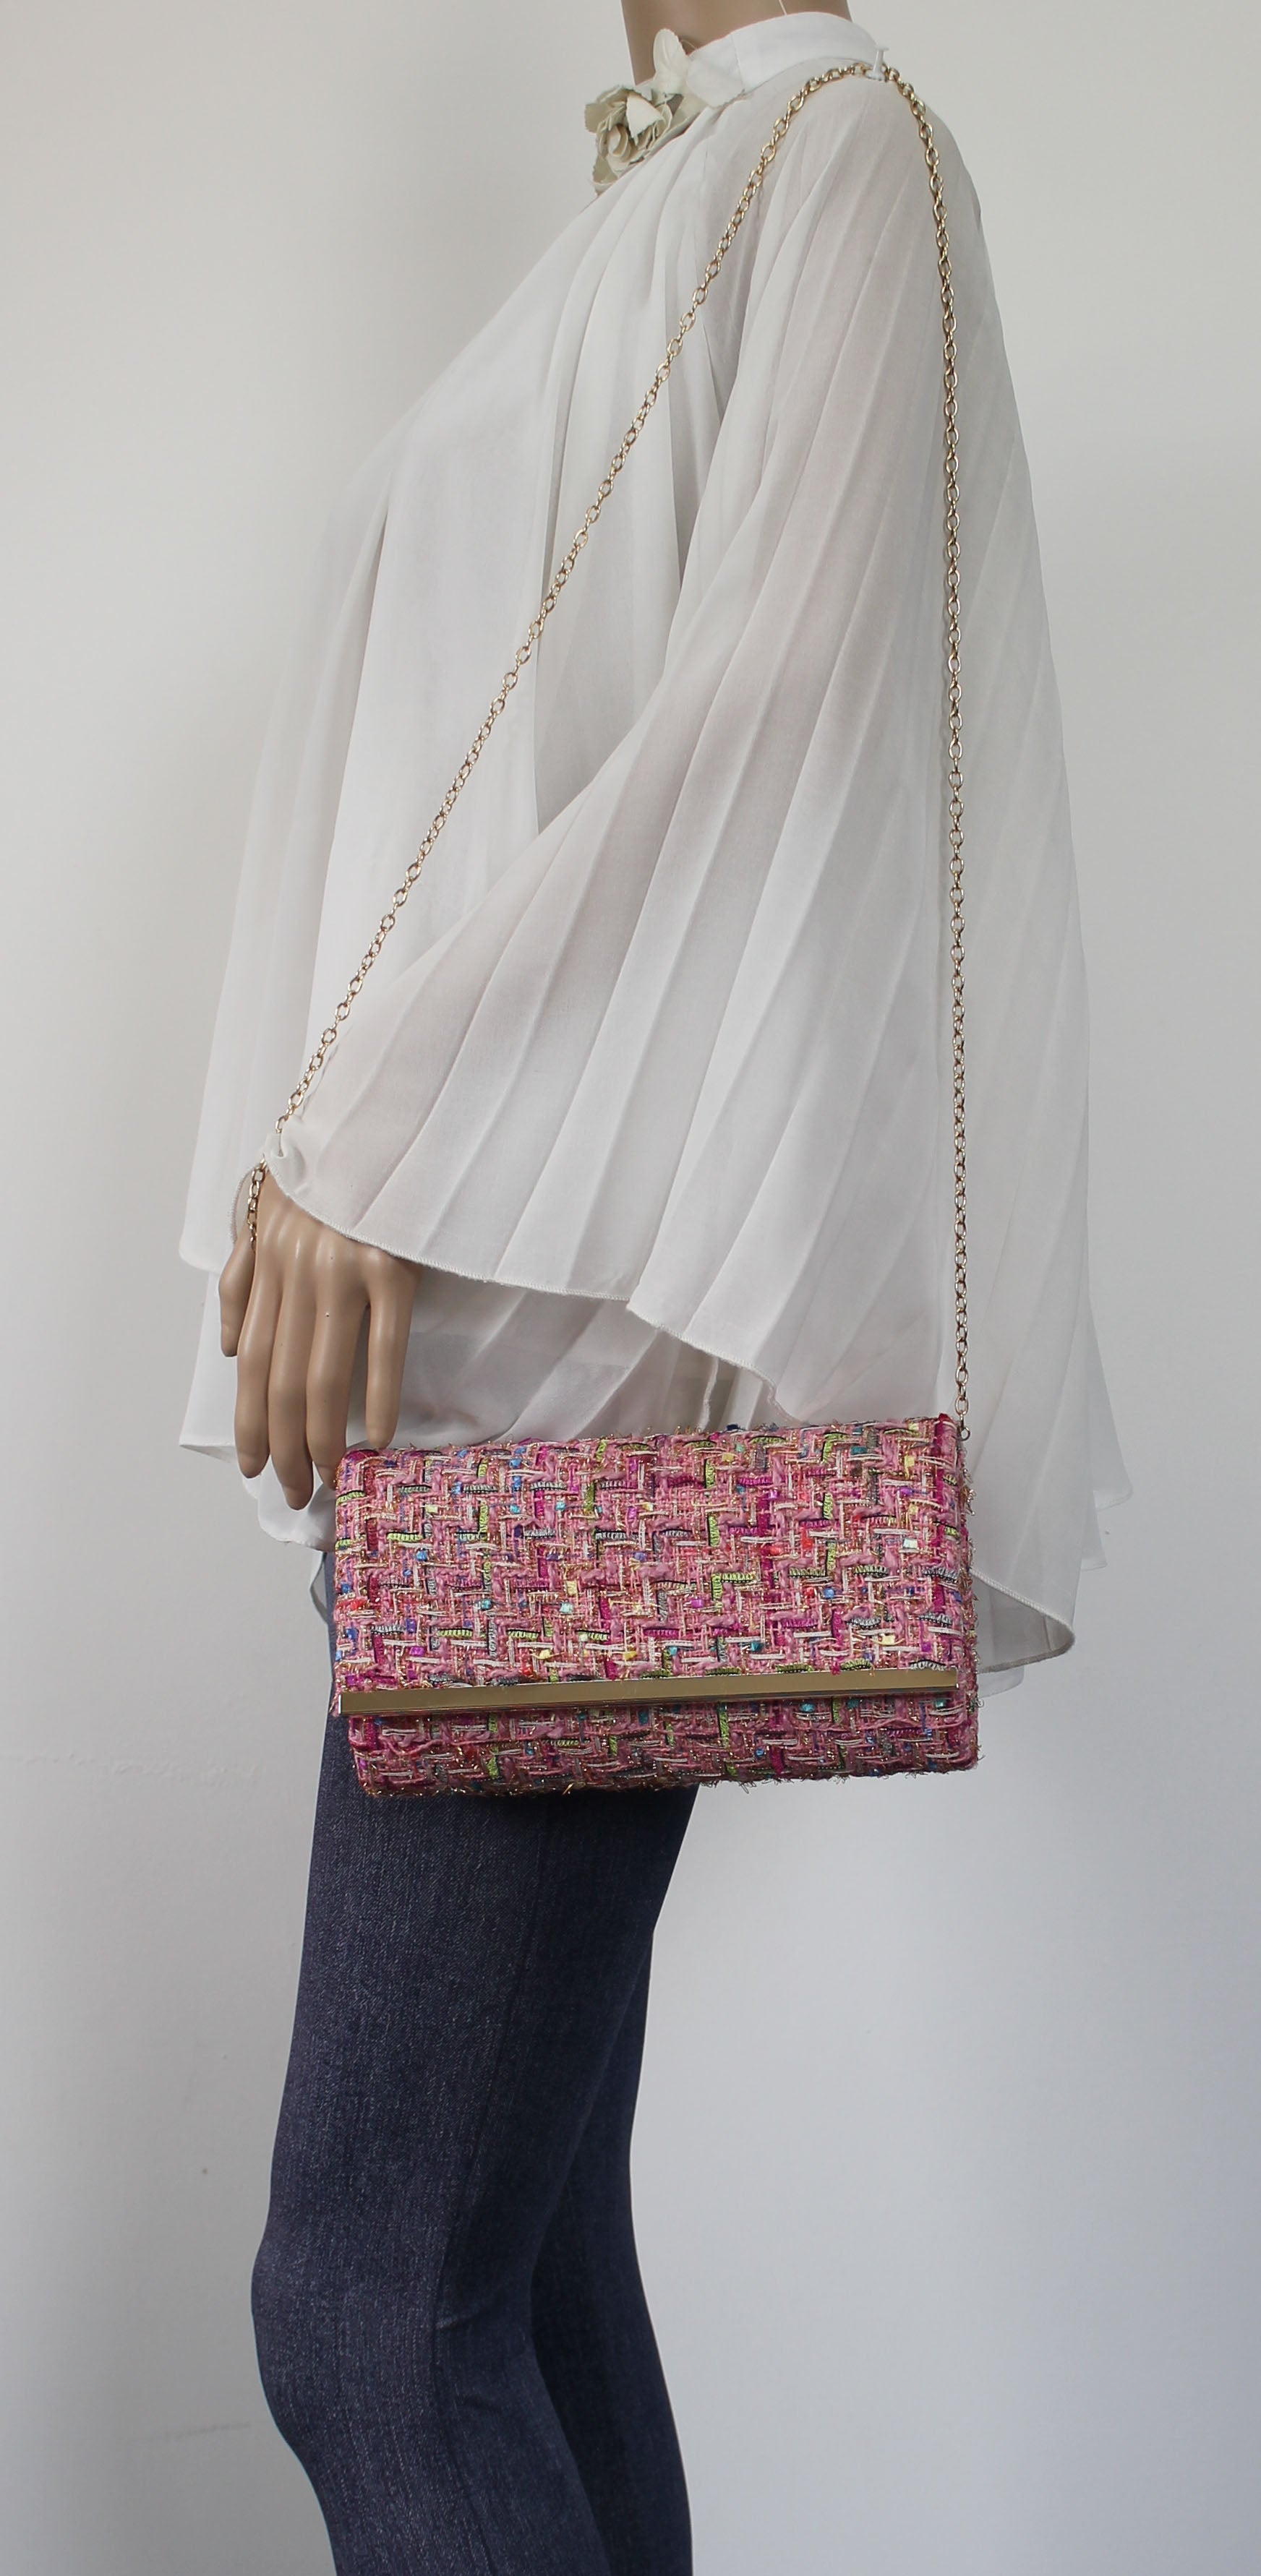 SWANKYSWANS Charlotte Clutch Bag Pink Cute Cheap Clutch Bag For Weddings School and Work